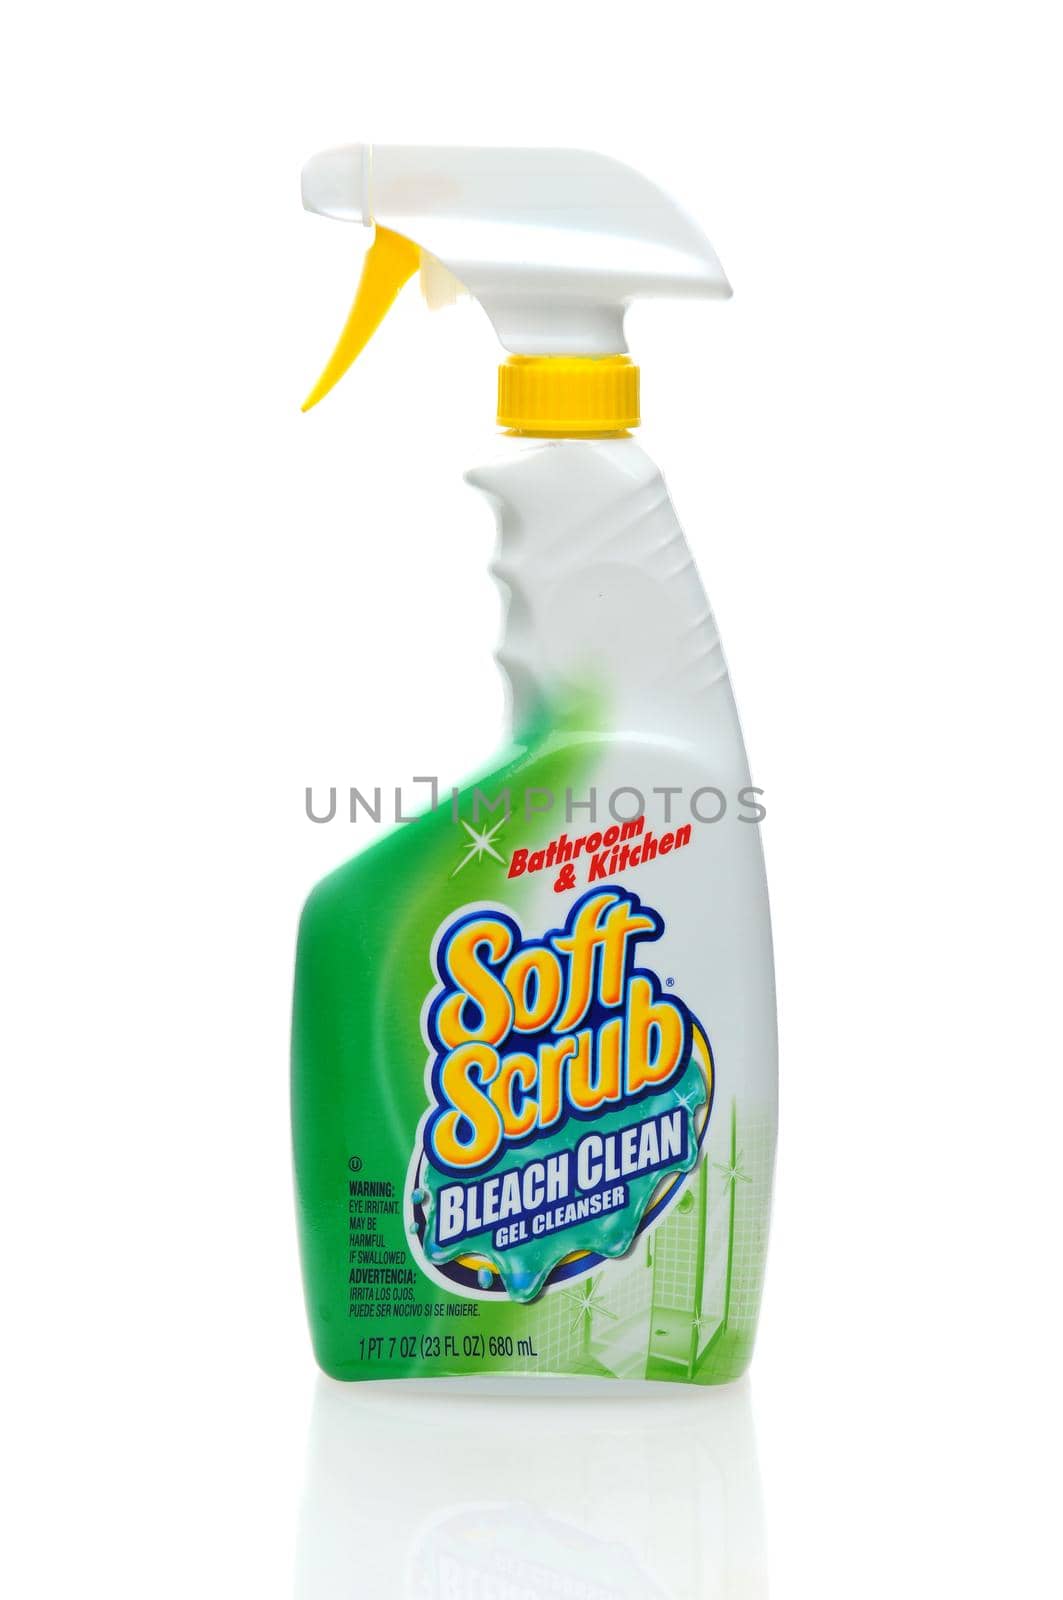 IRVINE, CALIFORNIA - 31 JAN 2011: Single 23oz bottle of Soft Scrub Bathroom & Kitchen Gel Cleanser on a white background